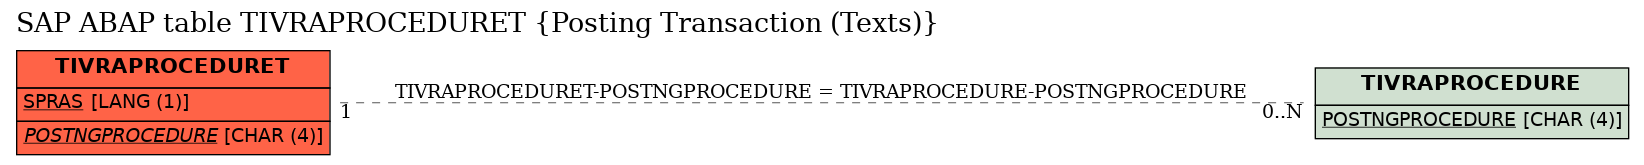 E-R Diagram for table TIVRAPROCEDURET (Posting Transaction (Texts))